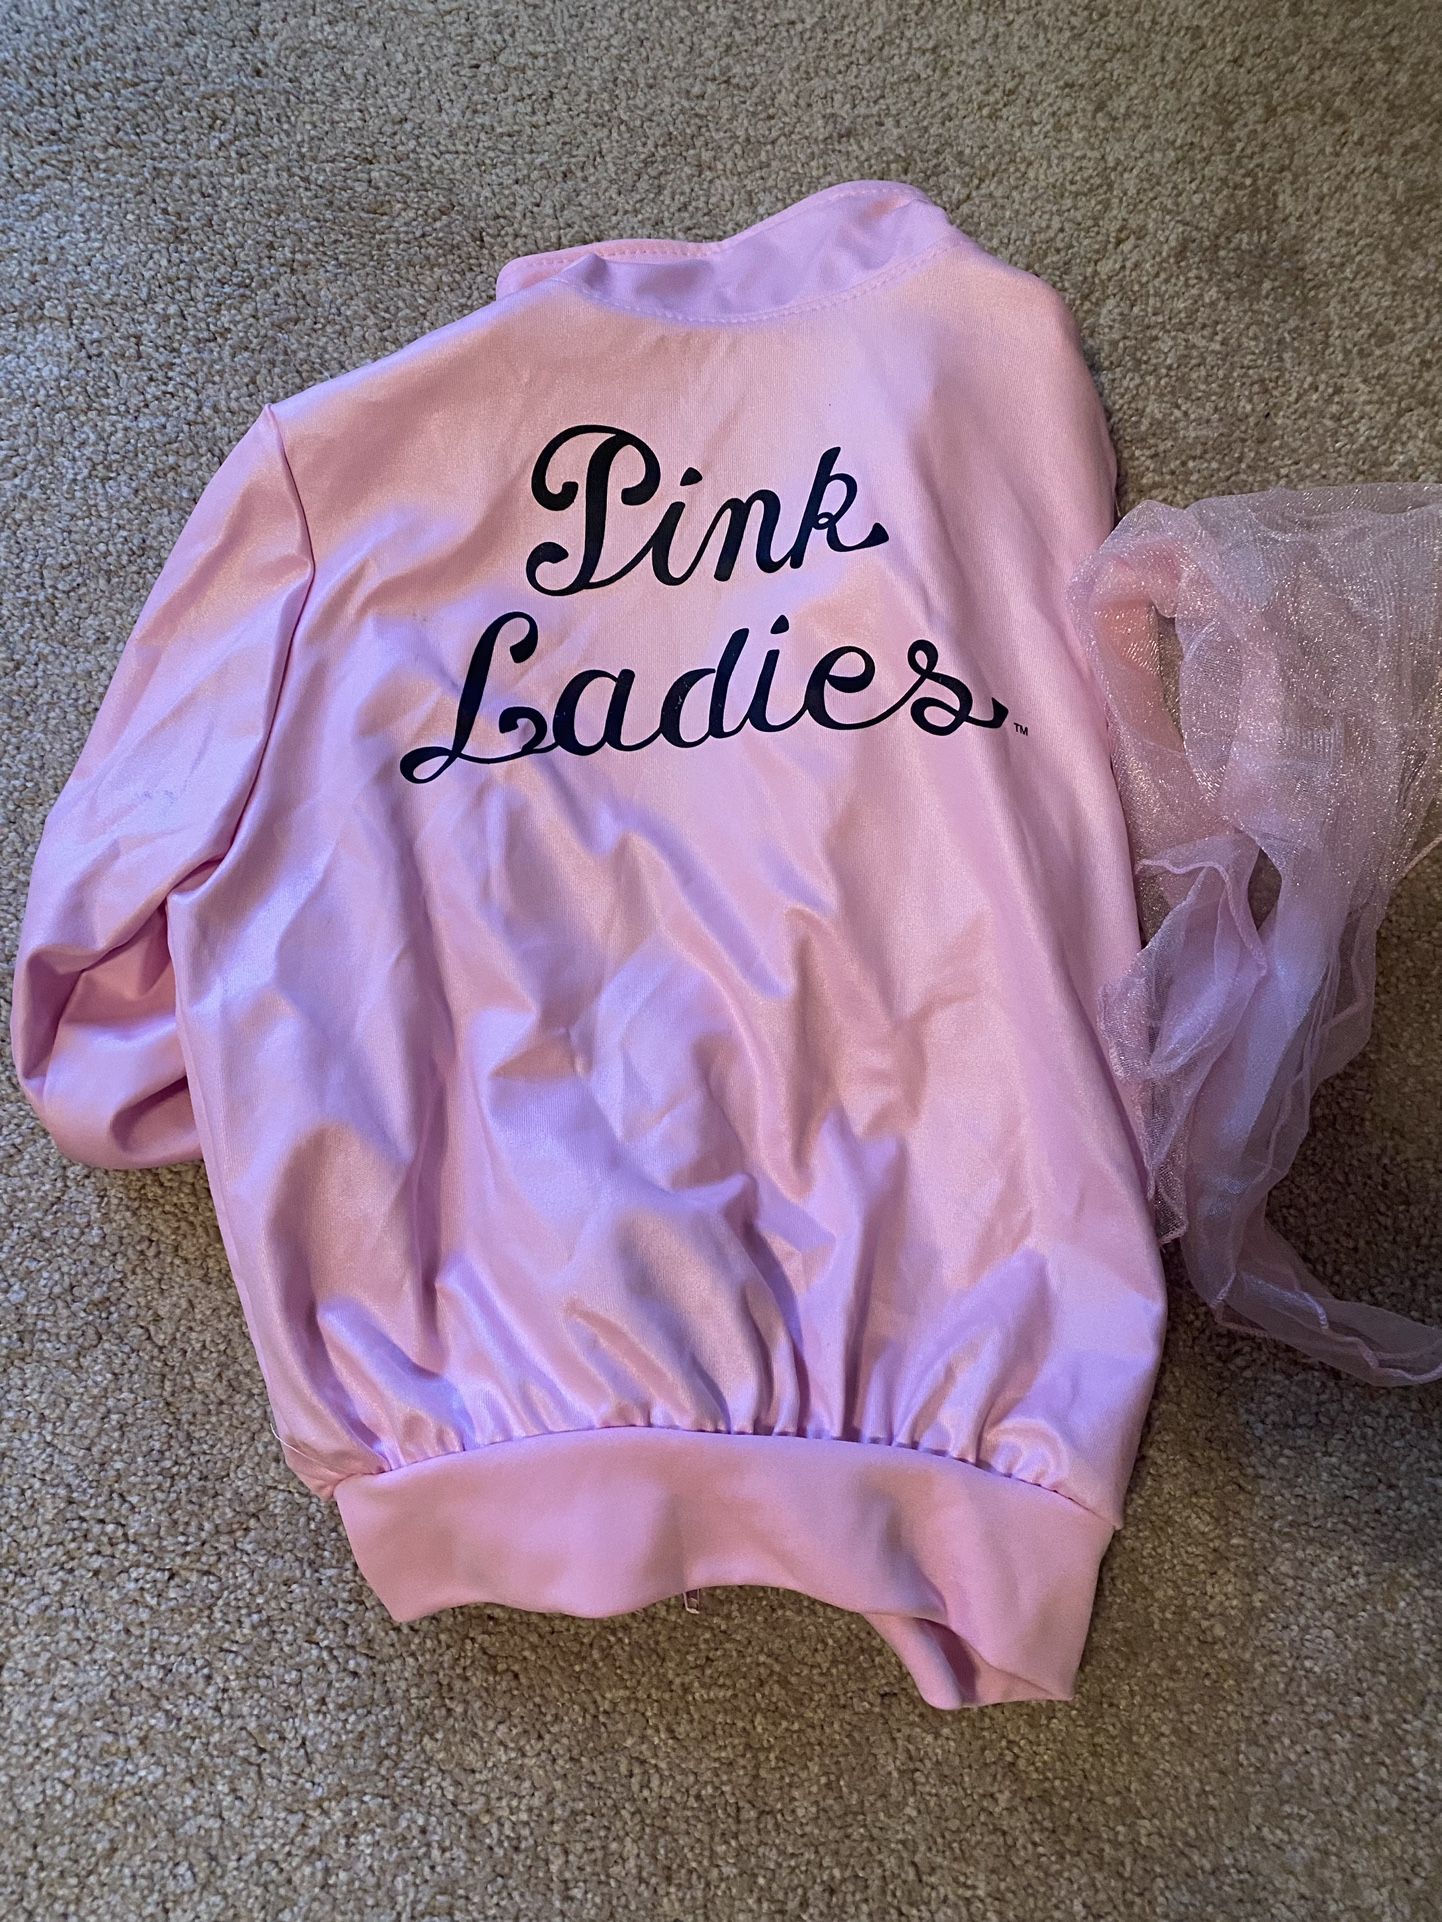 Girls Pink Ladies Jacket (costume)—size Small